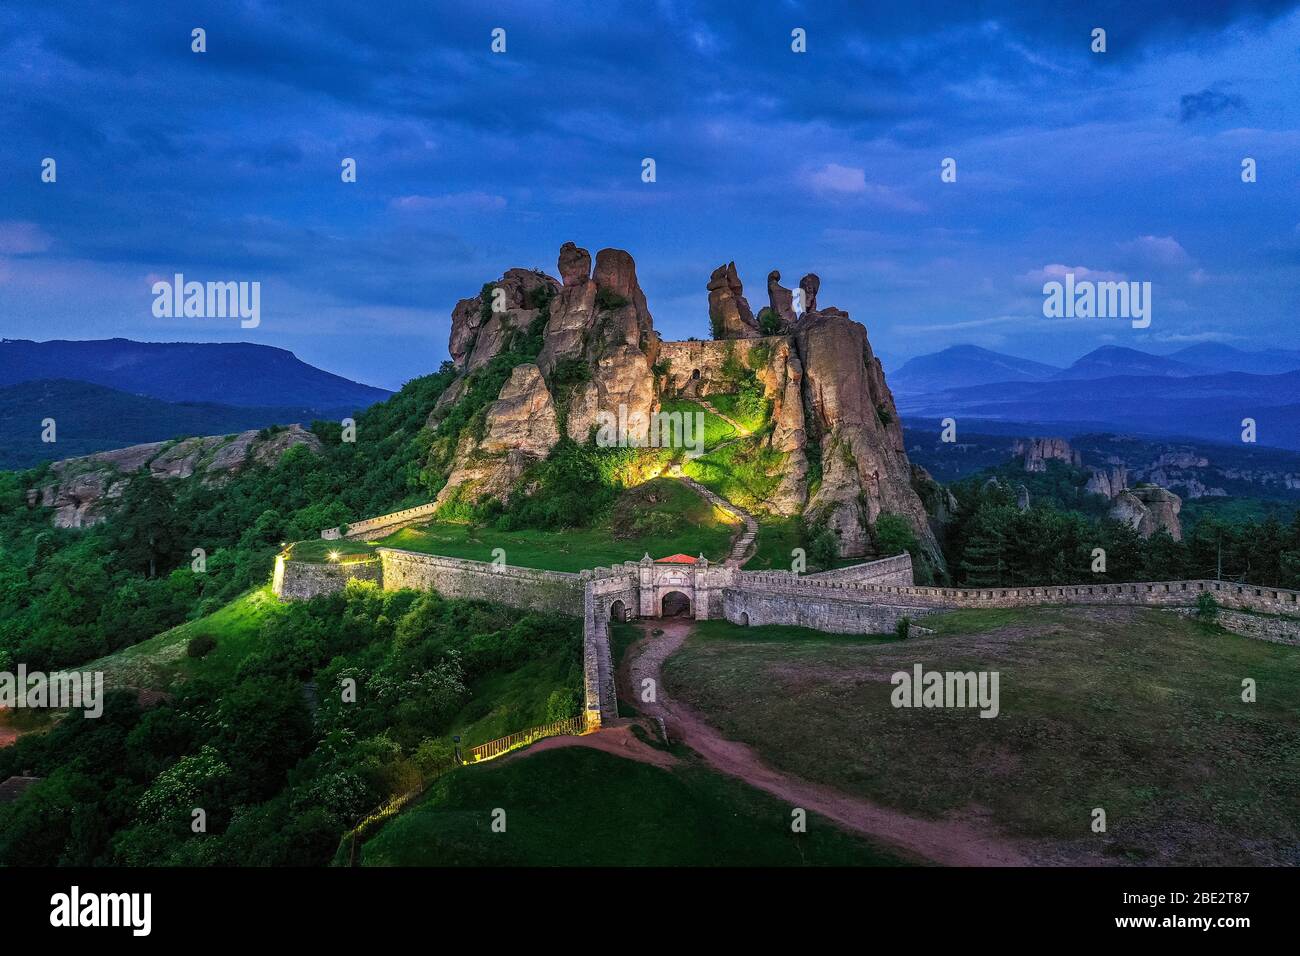 Europe, Bulgaria, Belogradchik, aerial view of Kaleto Rock Fortress rock formations Stock Photo